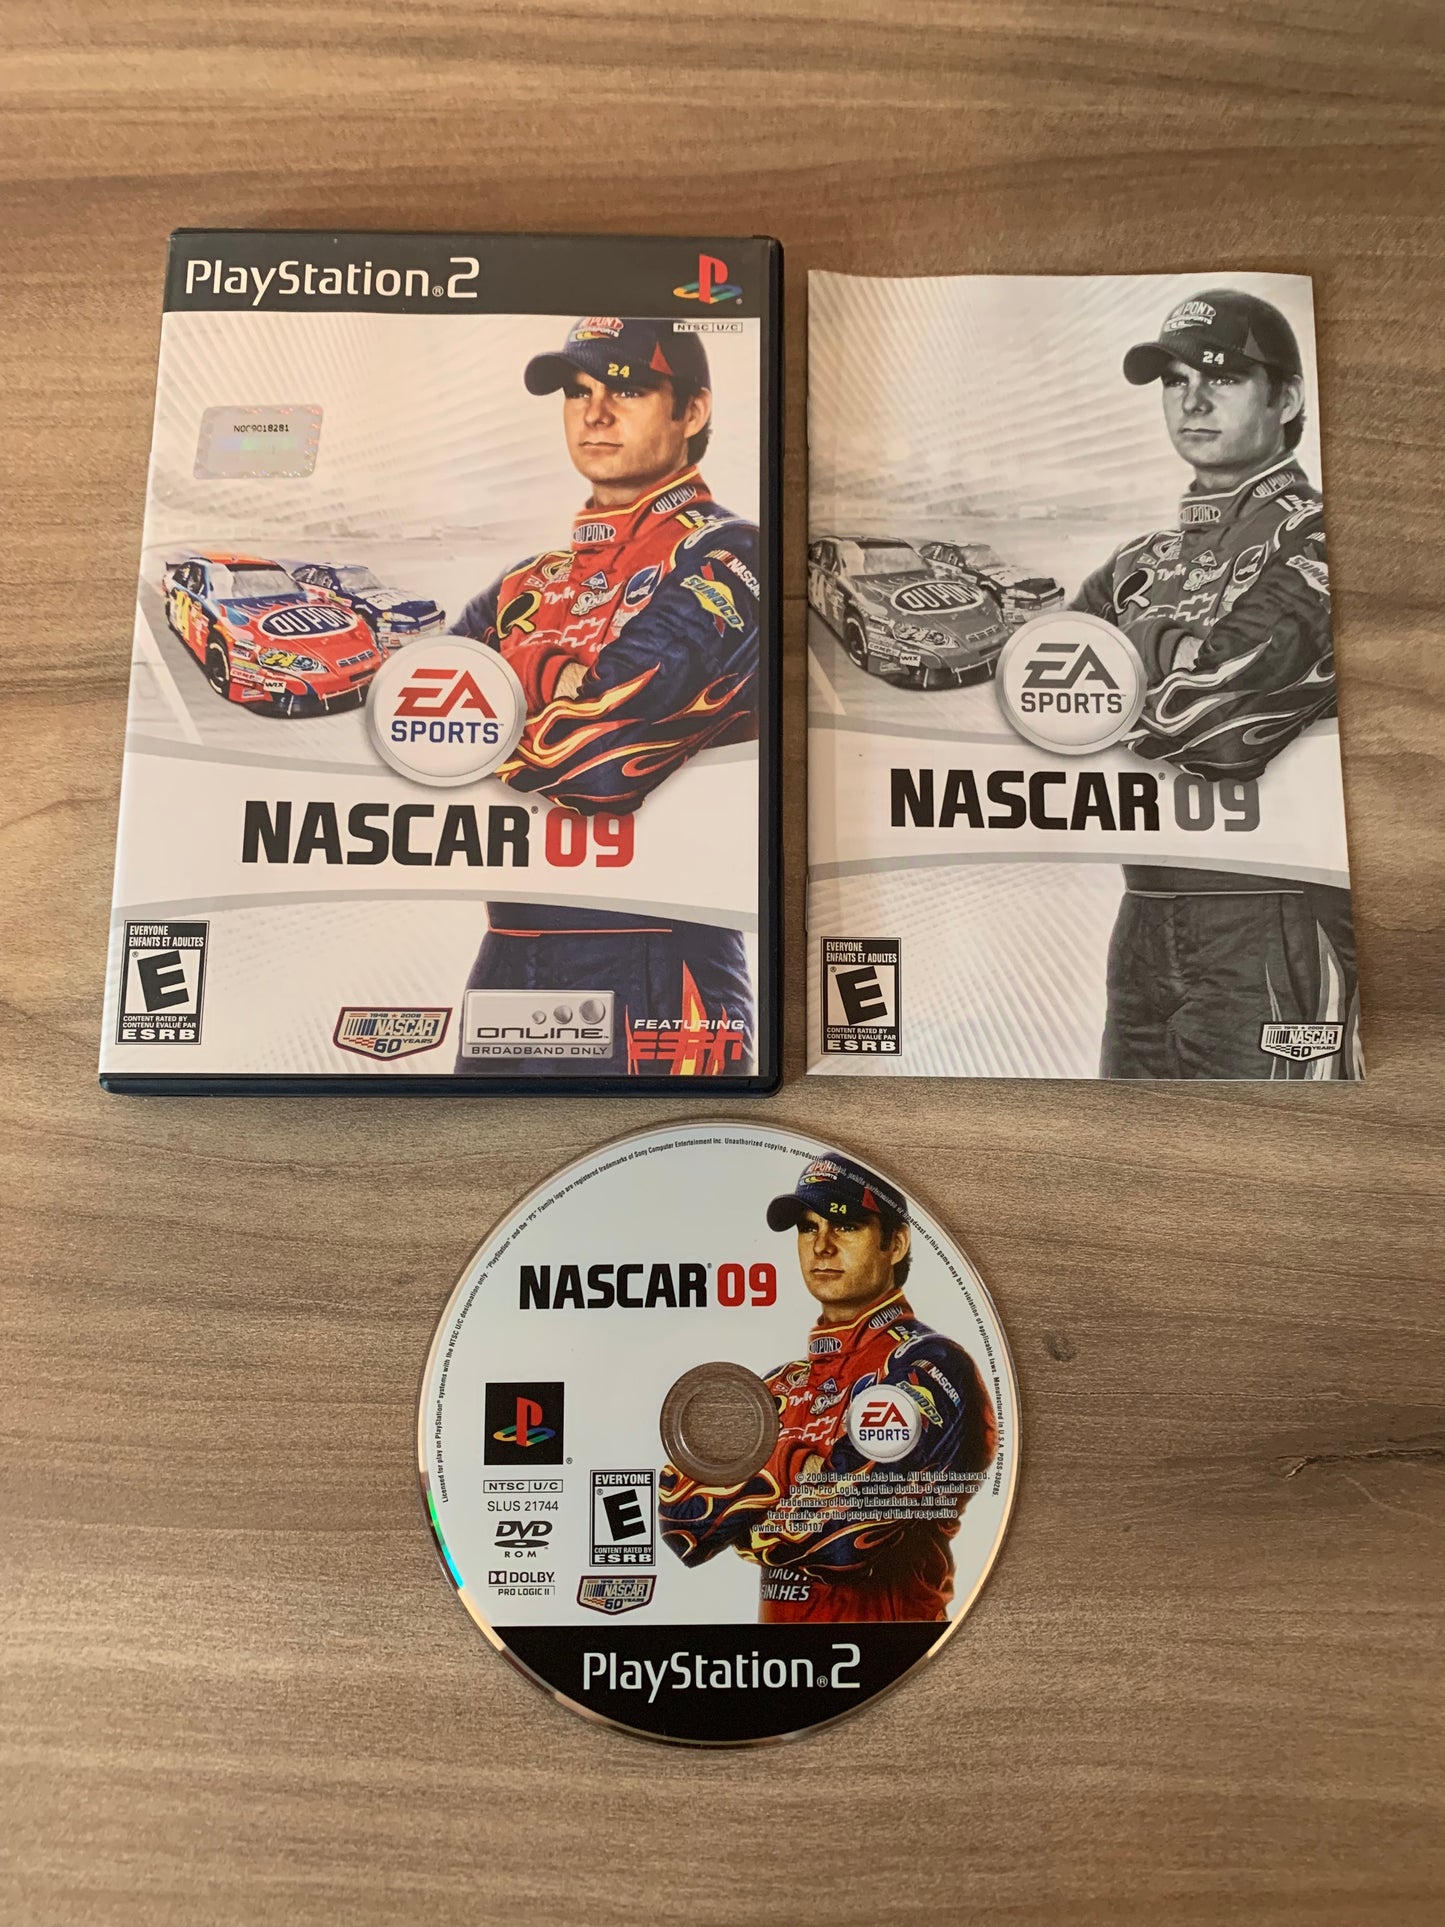 PiXEL-RETRO.COM : SONY PLAYSTATION 2 (PS2) COMPLET CIB BOX MANUAL GAME NTSC NASCAR 09